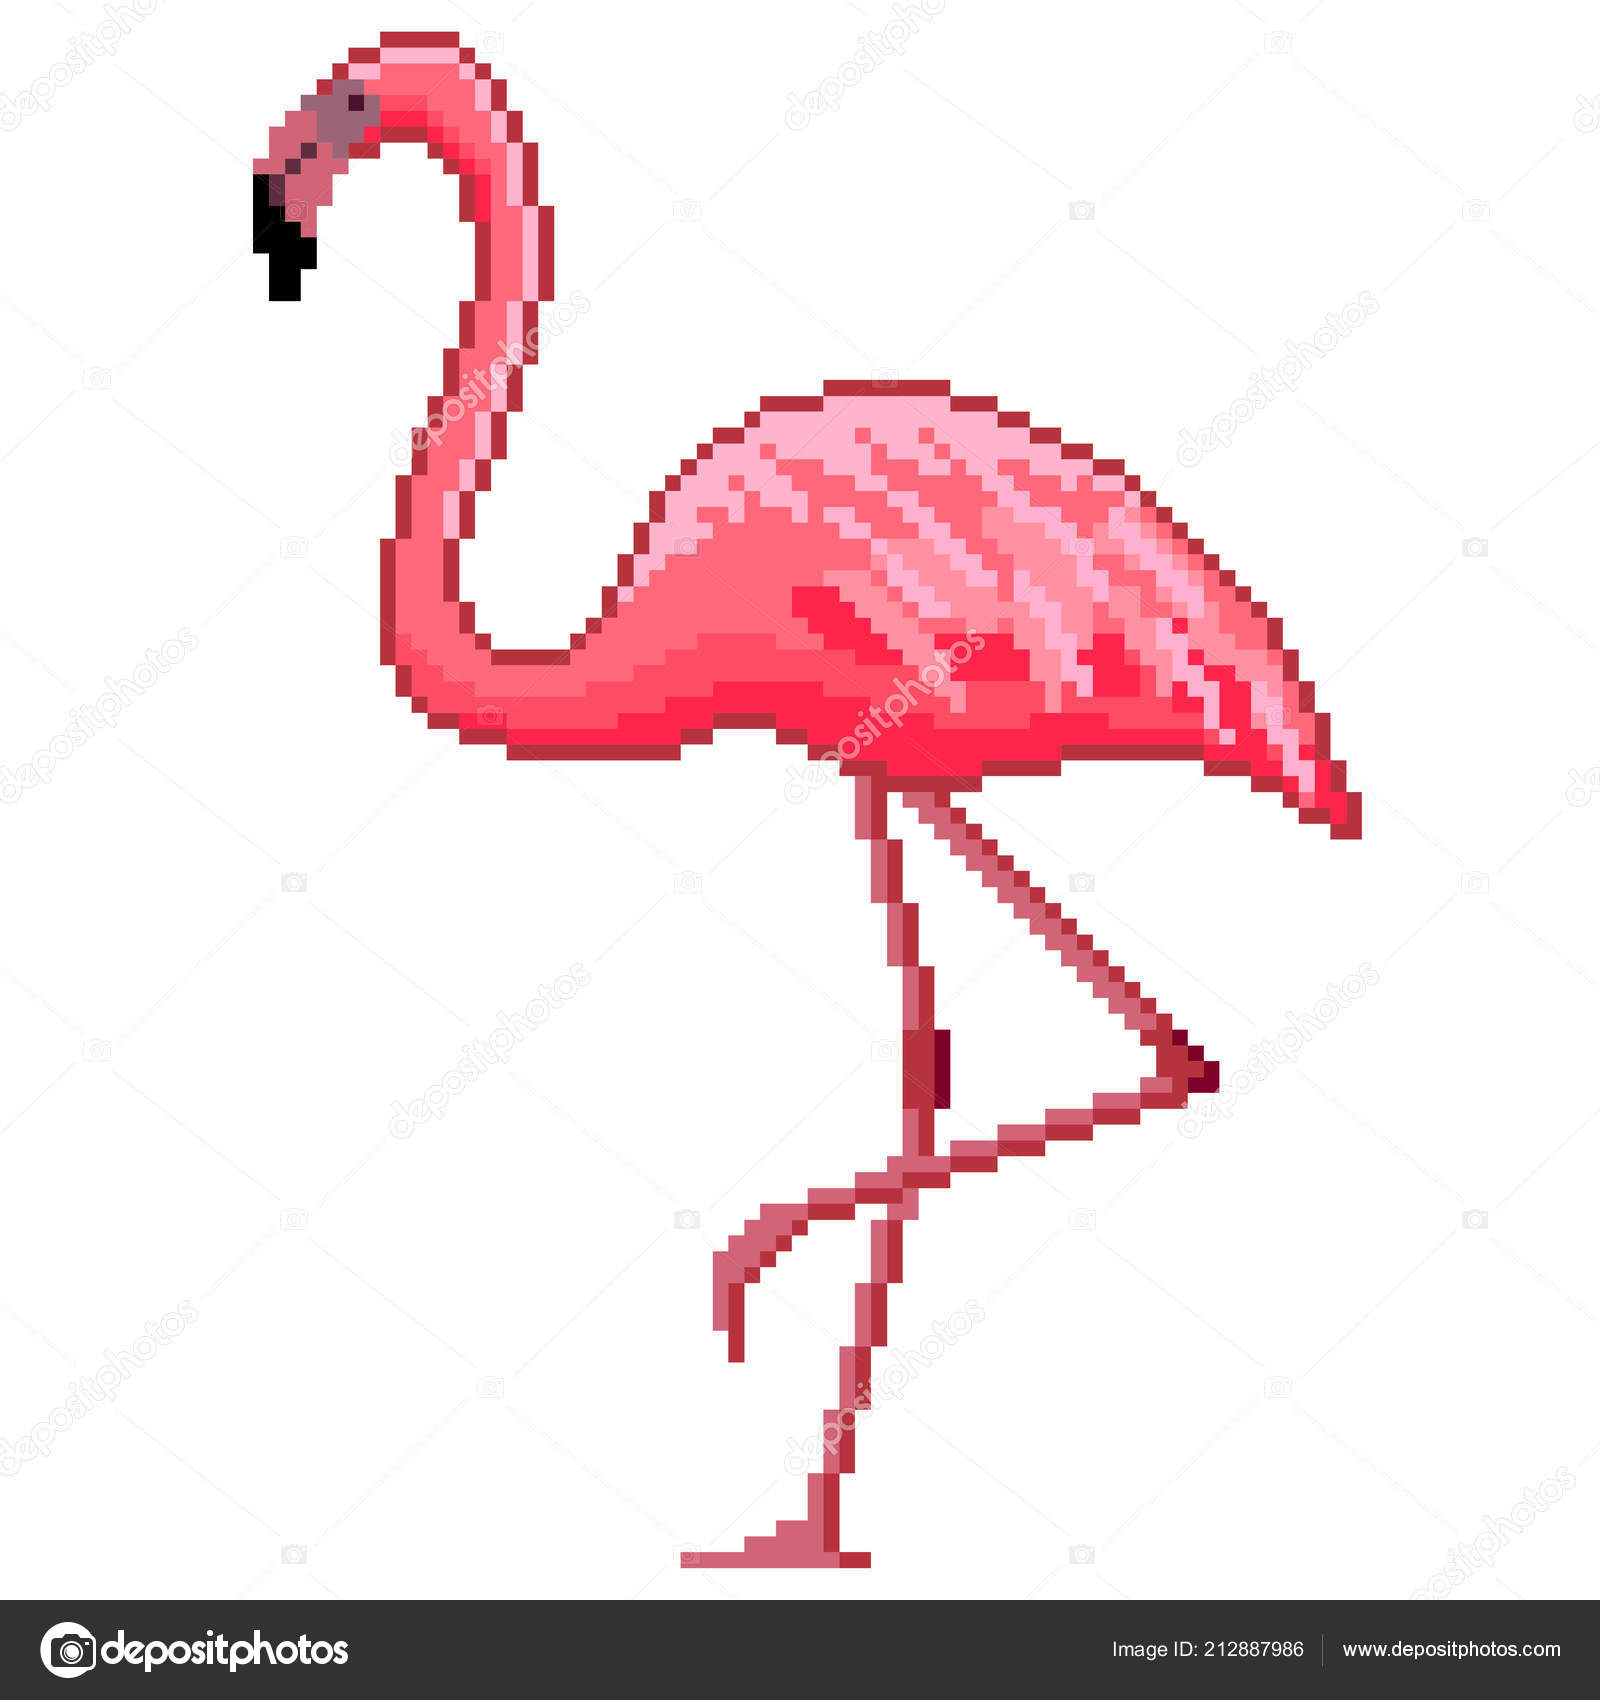 Flamingo Pixel Art Pixel Art Pink Flamingo Detailed Illustration Isolated Vector Stock Vector C Andegraund548 212887986